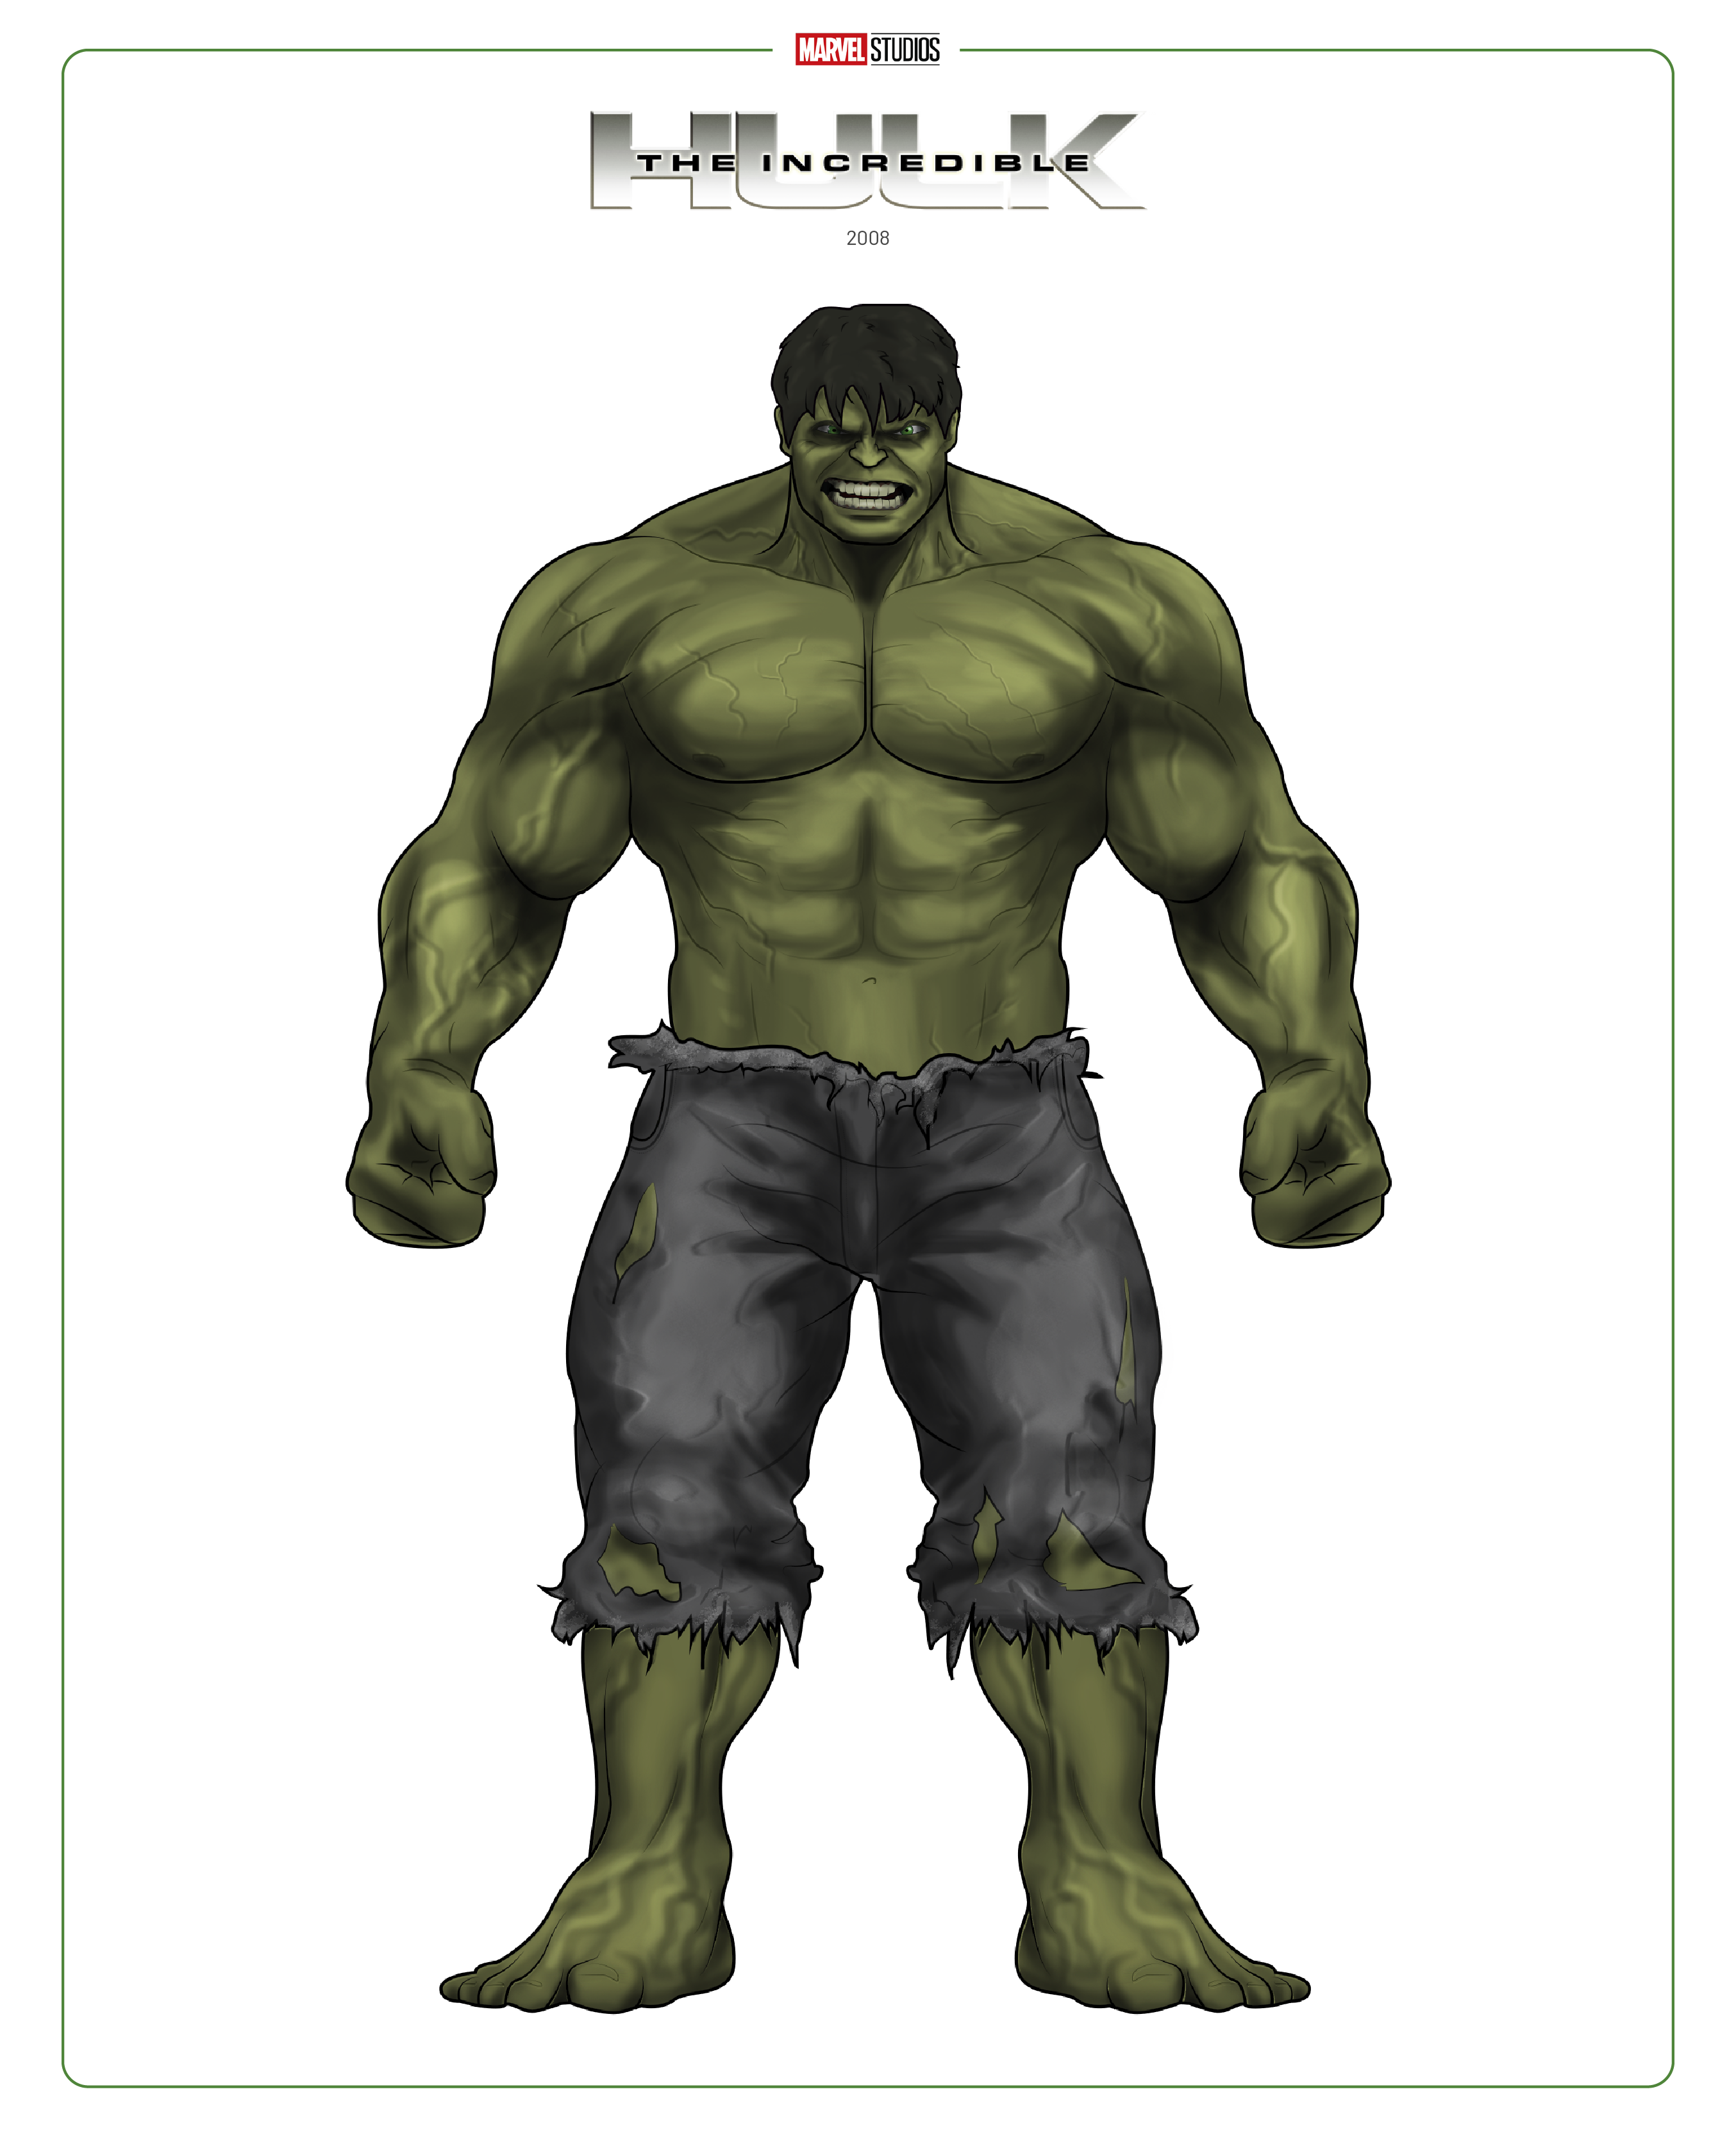 Hulk by efrajoey1 on DeviantArt